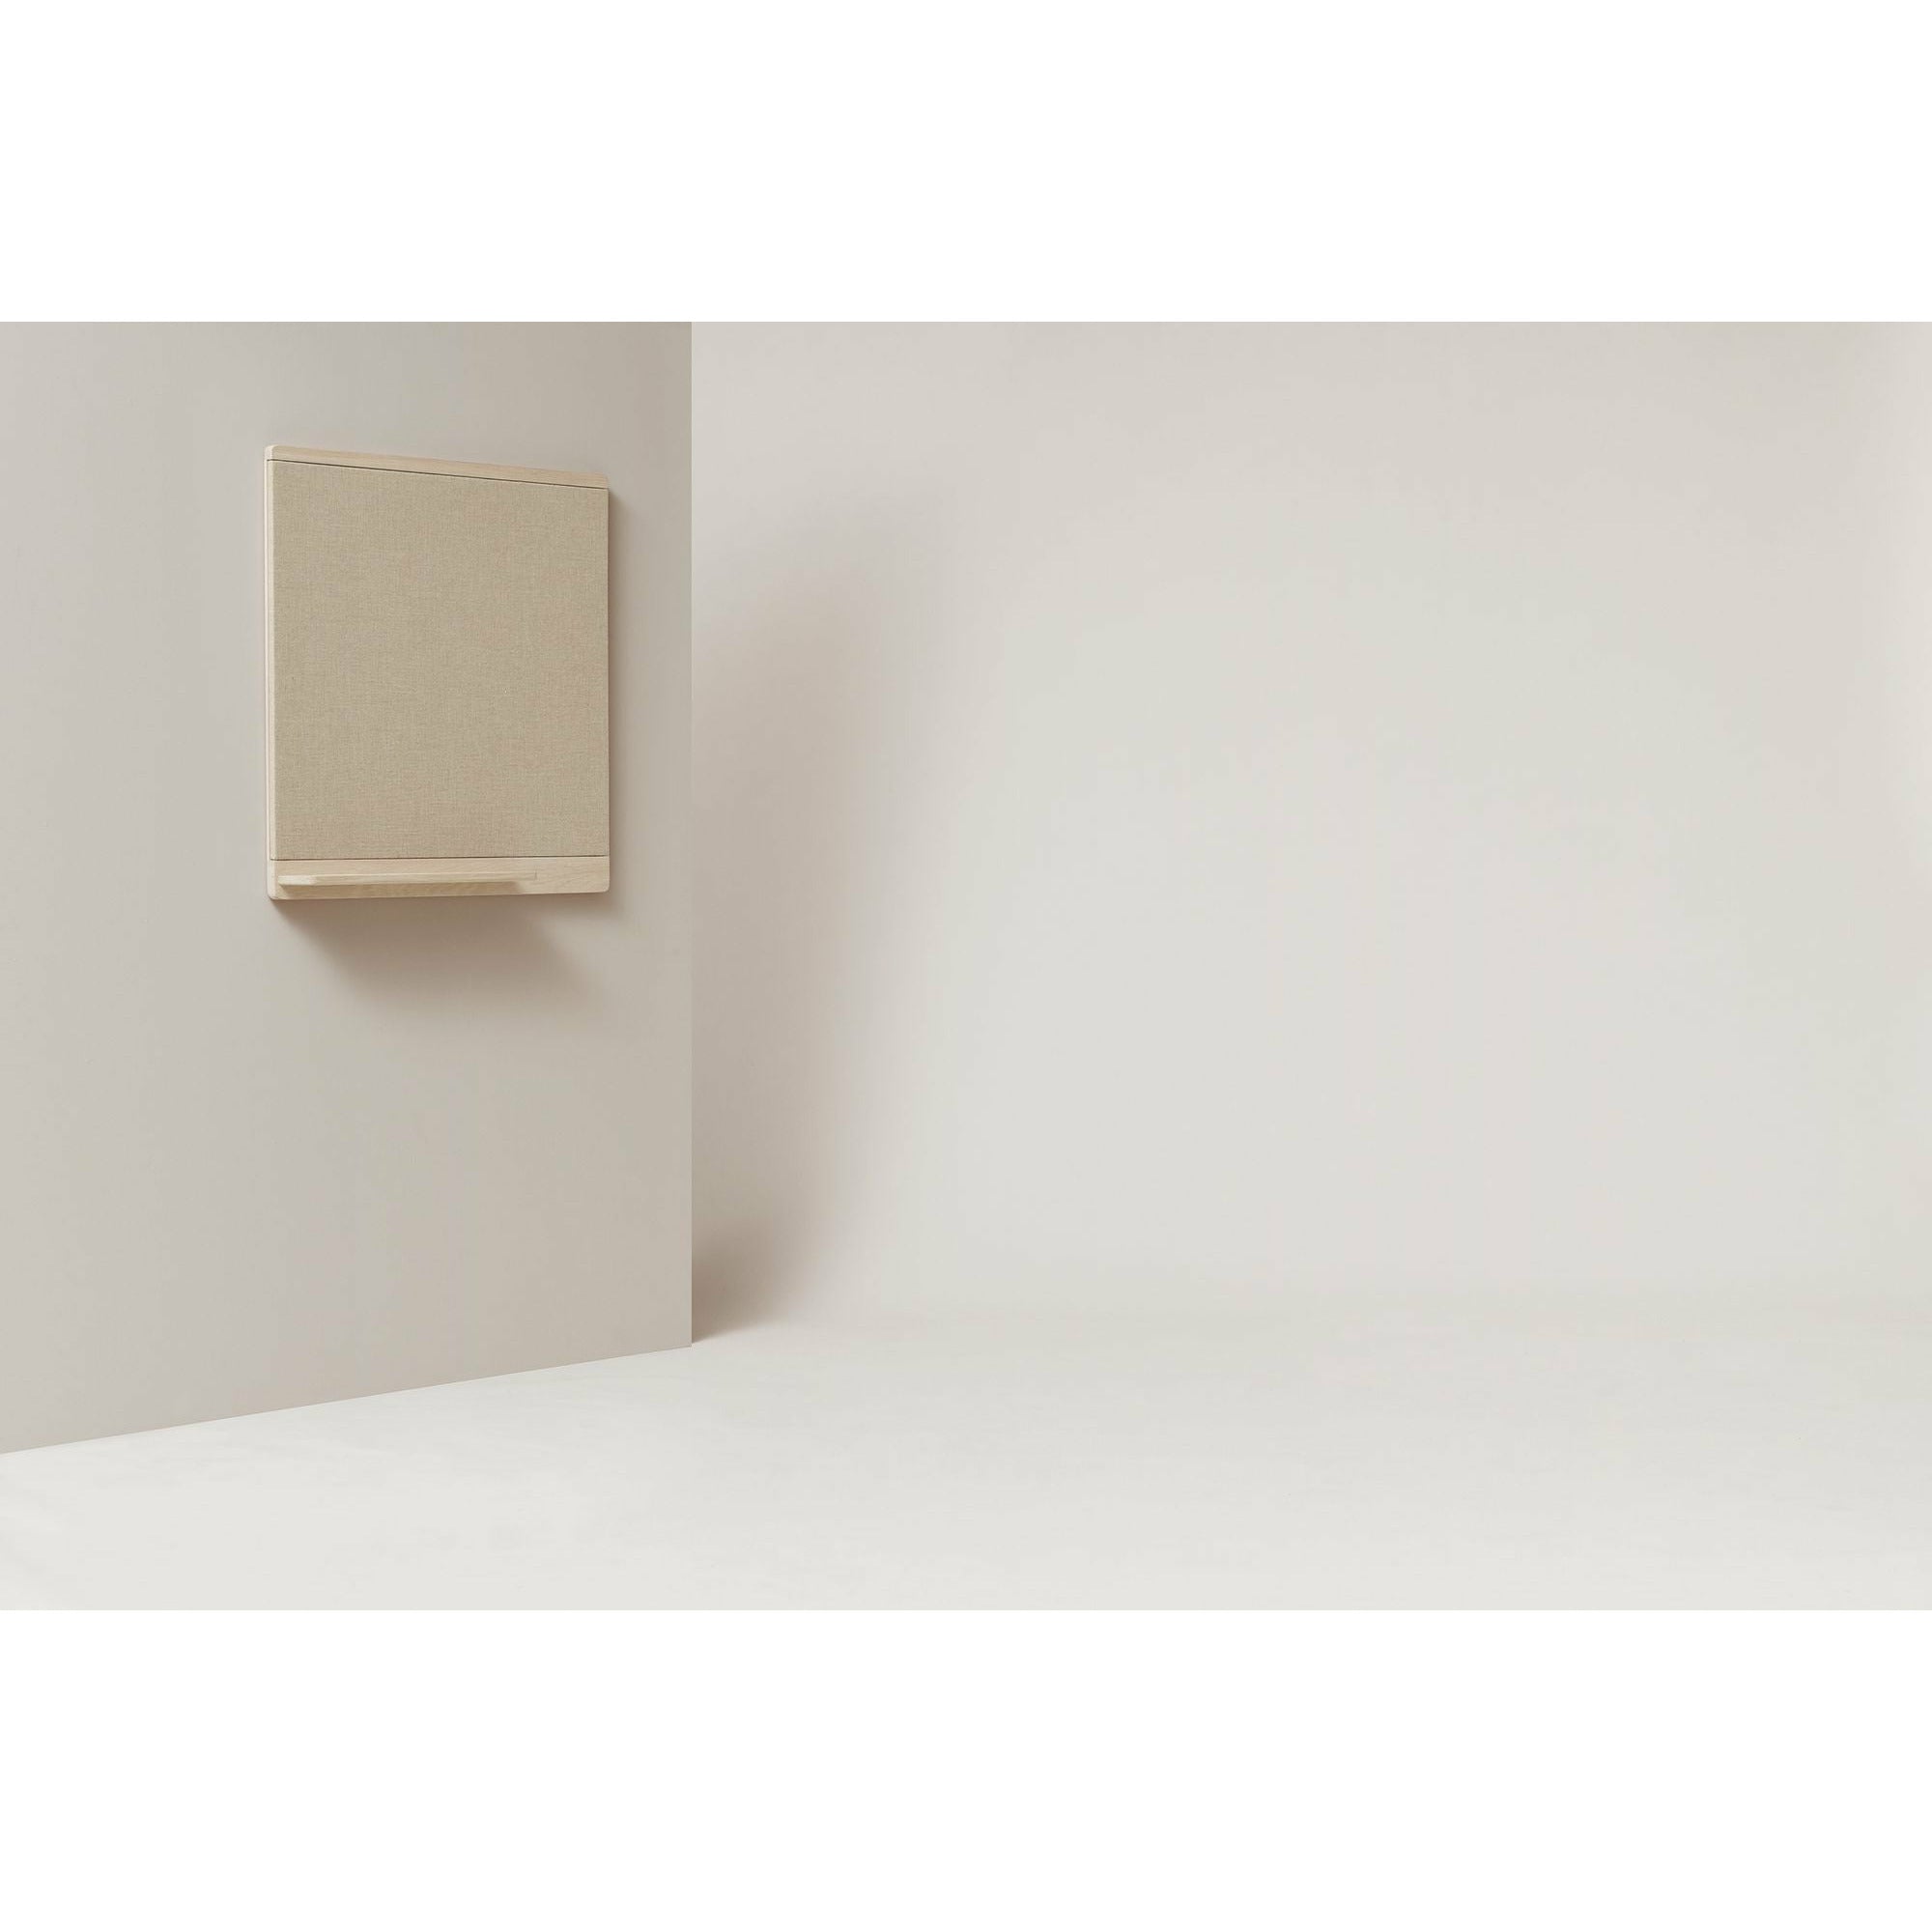 Form & Reform Rim Pinboard 75x75 cm. Quercia bianca